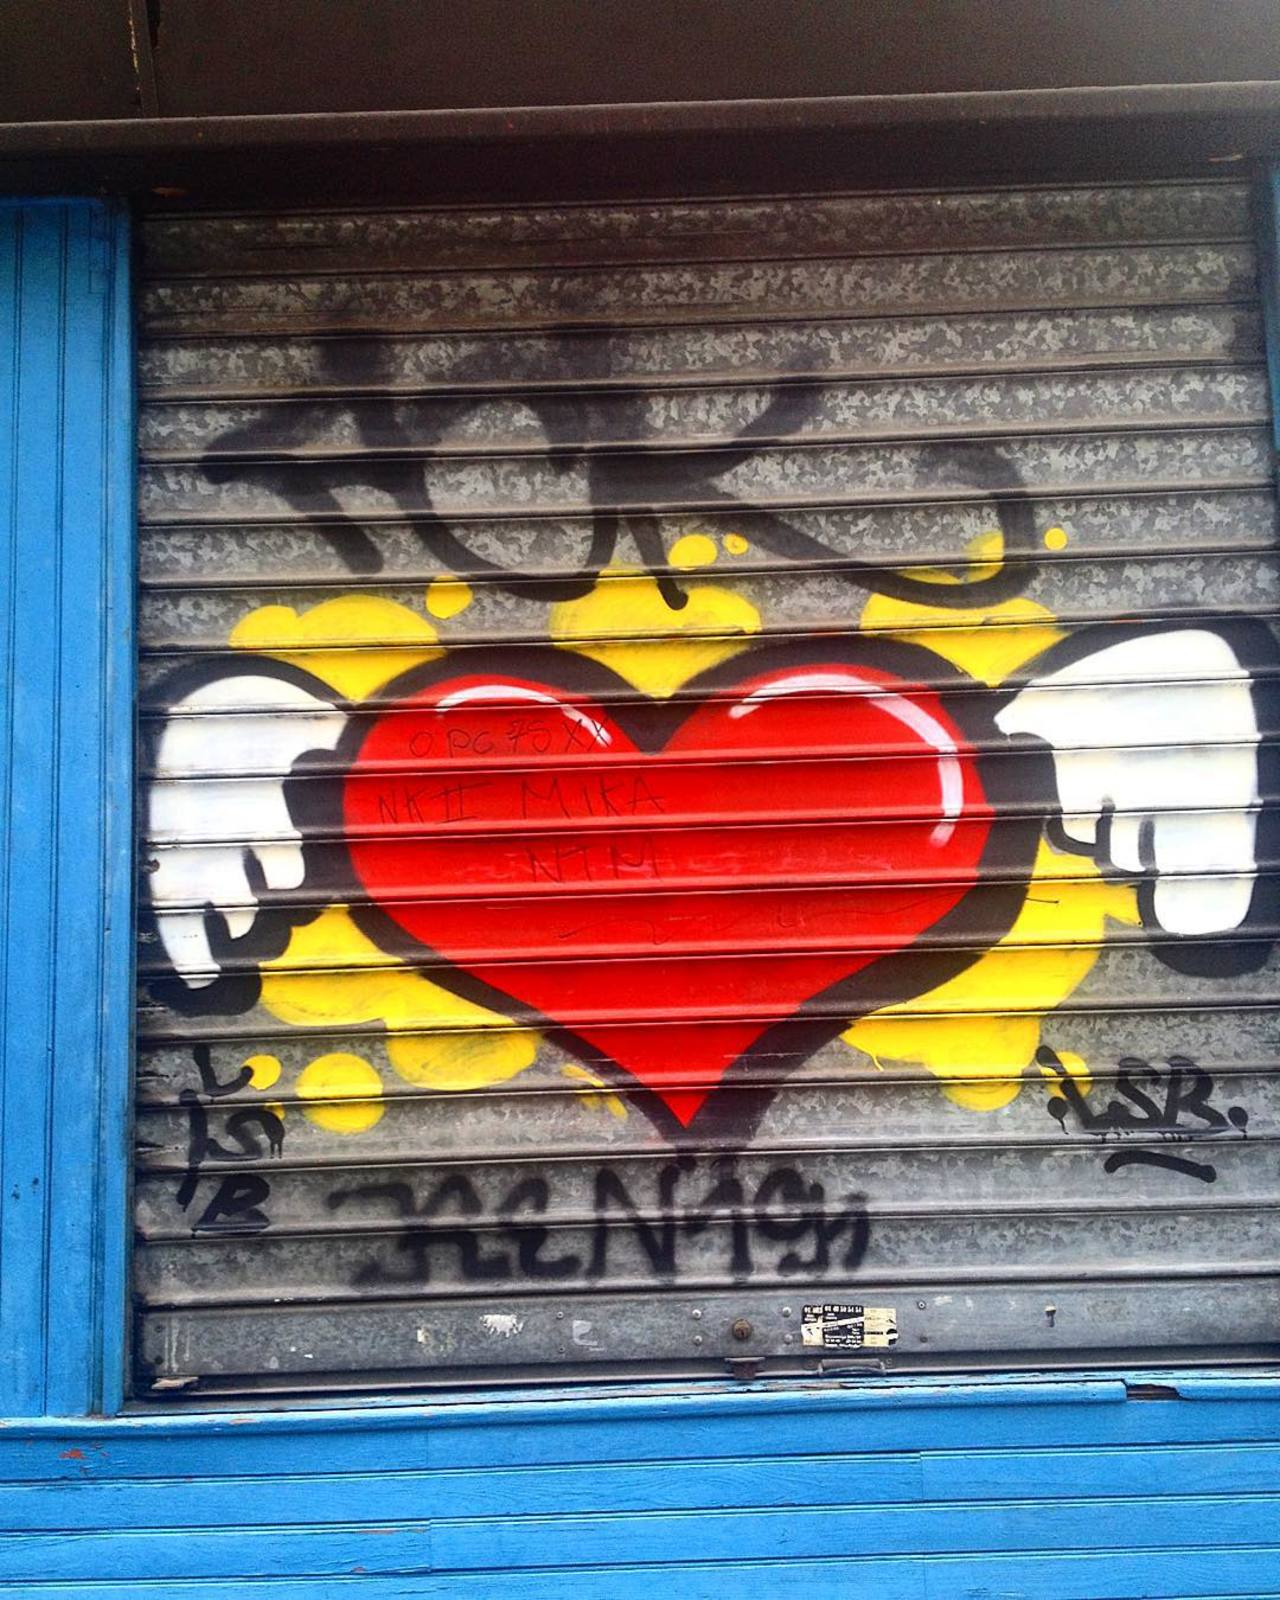 #Paris #graffiti photo by @mh2p_ http://ift.tt/1MQ1uGB #StreetArt https://t.co/agiaERu152